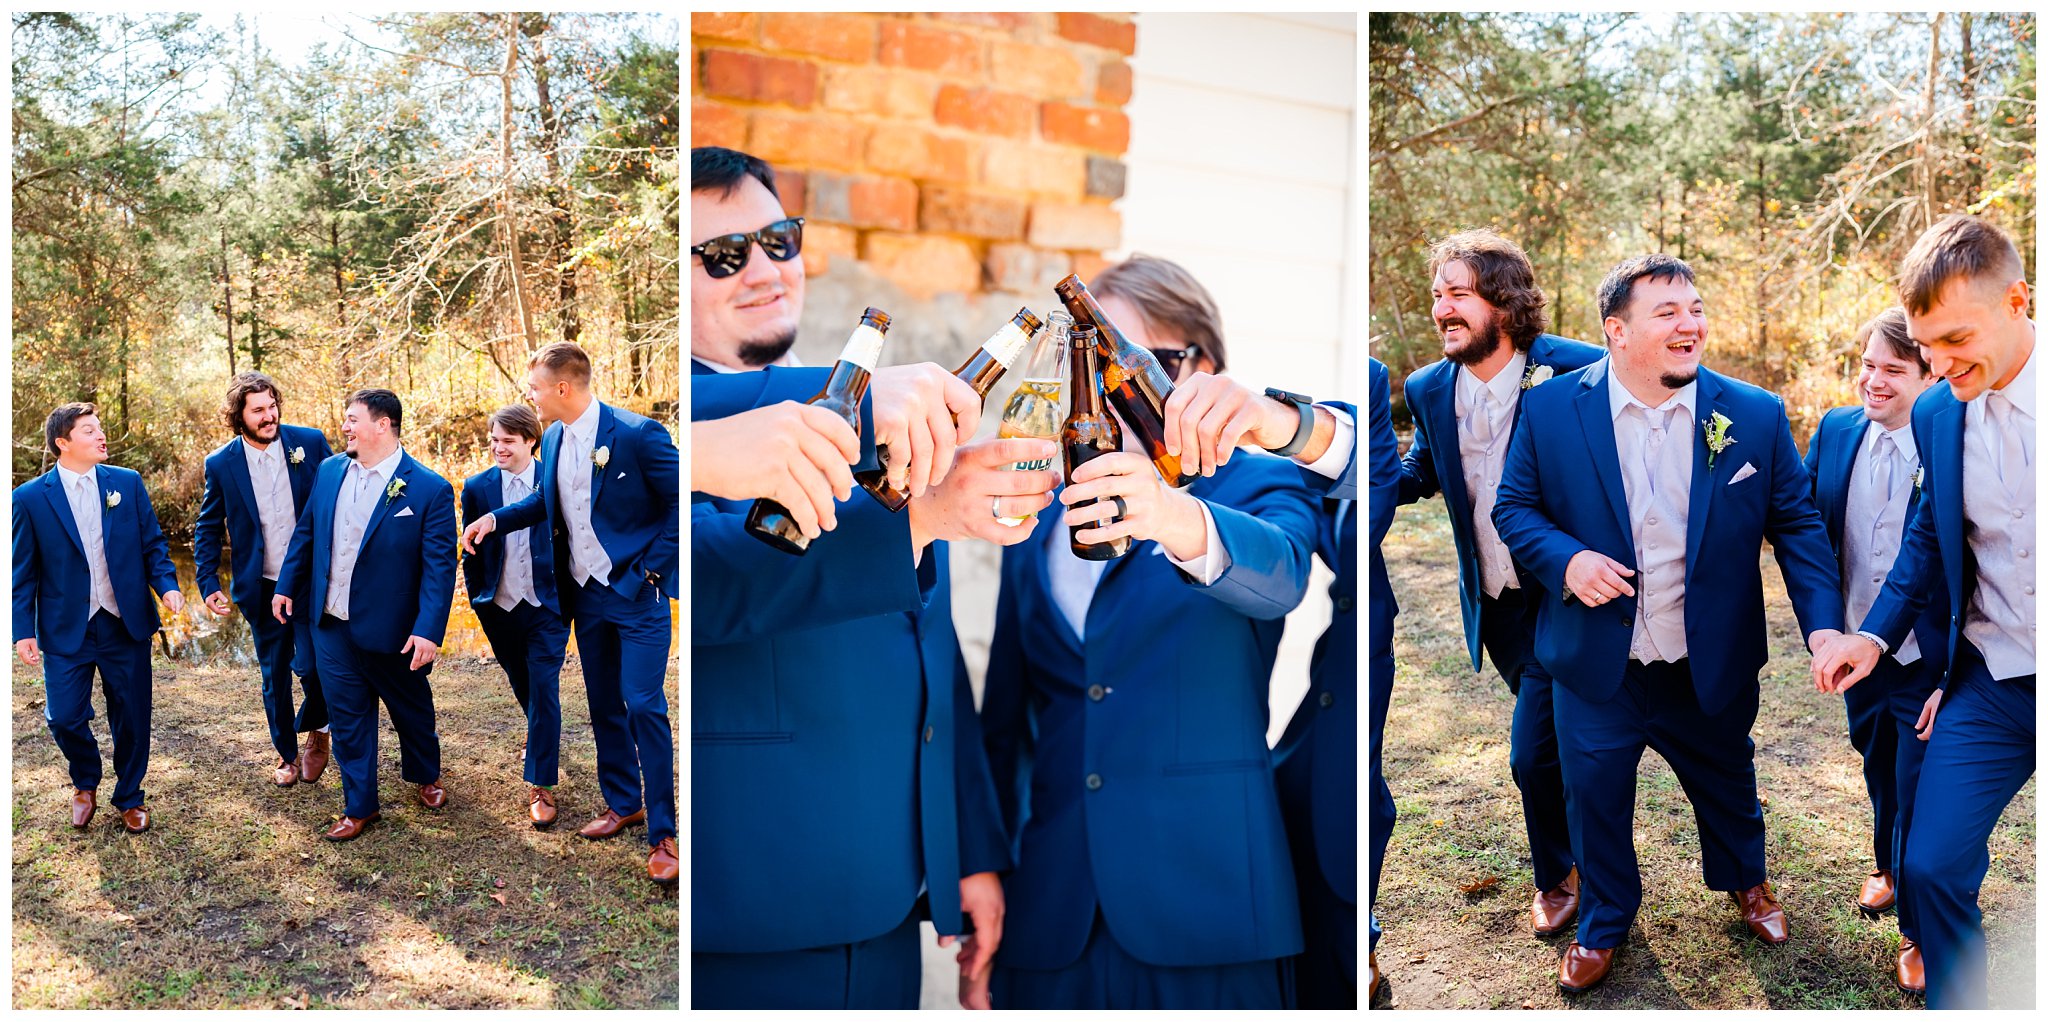 Charlotte wedding photographer shoots groomsmen outdoors